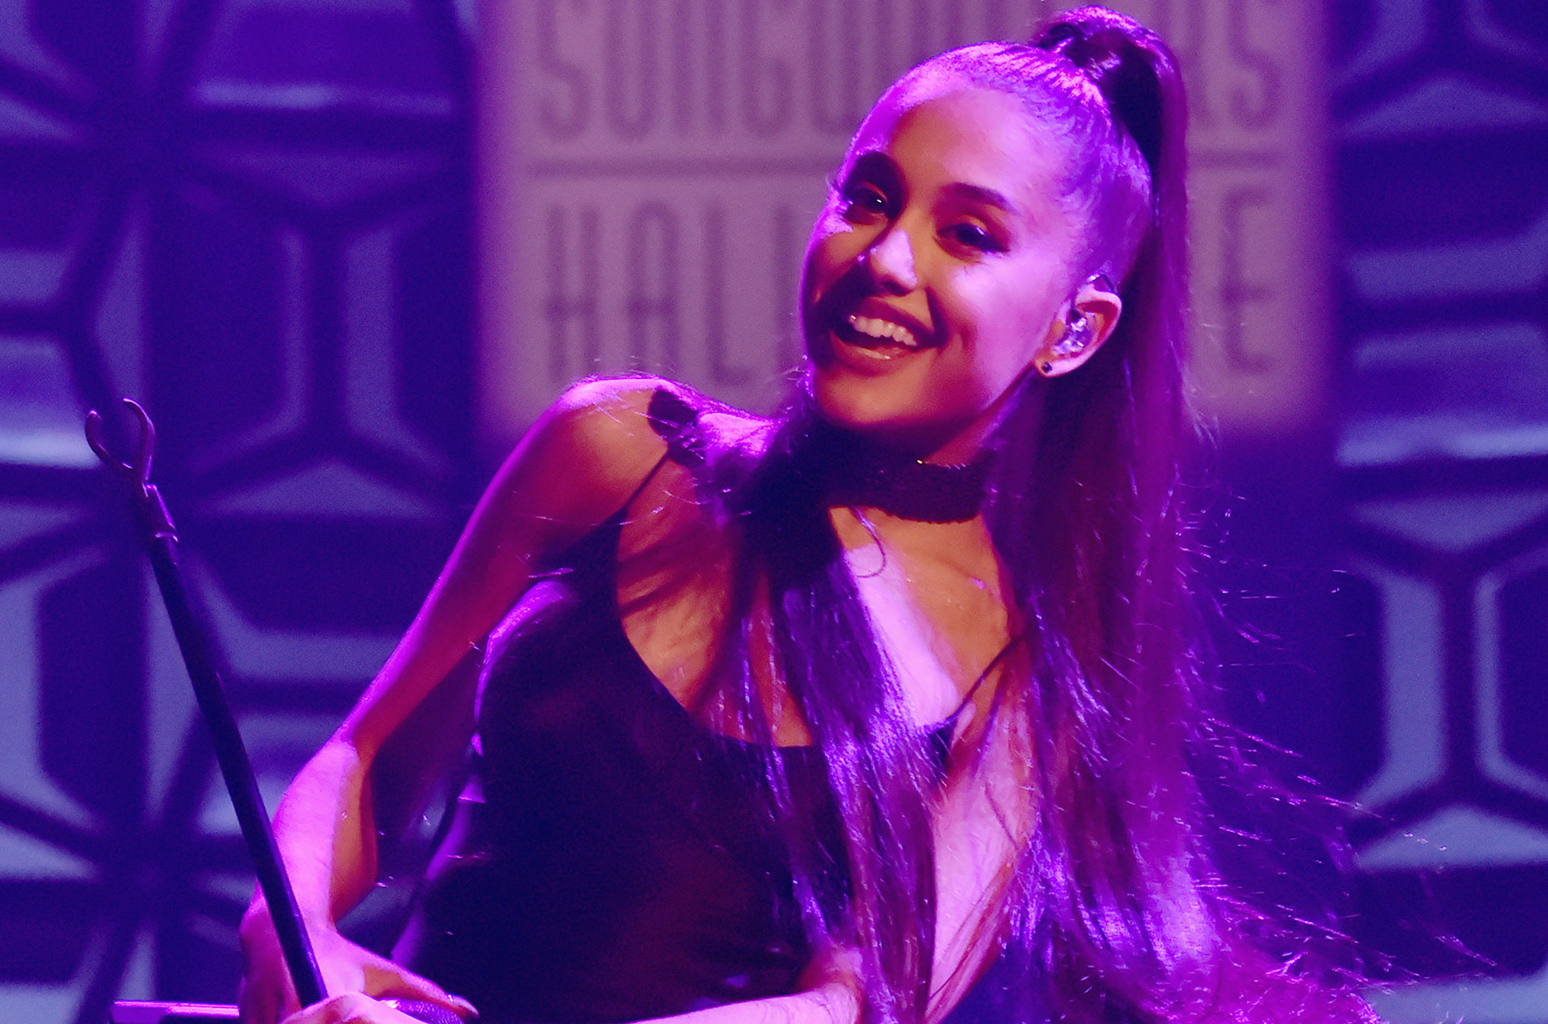 Emotional Ariana Grande wins Best Pop prize at MTV VMAs